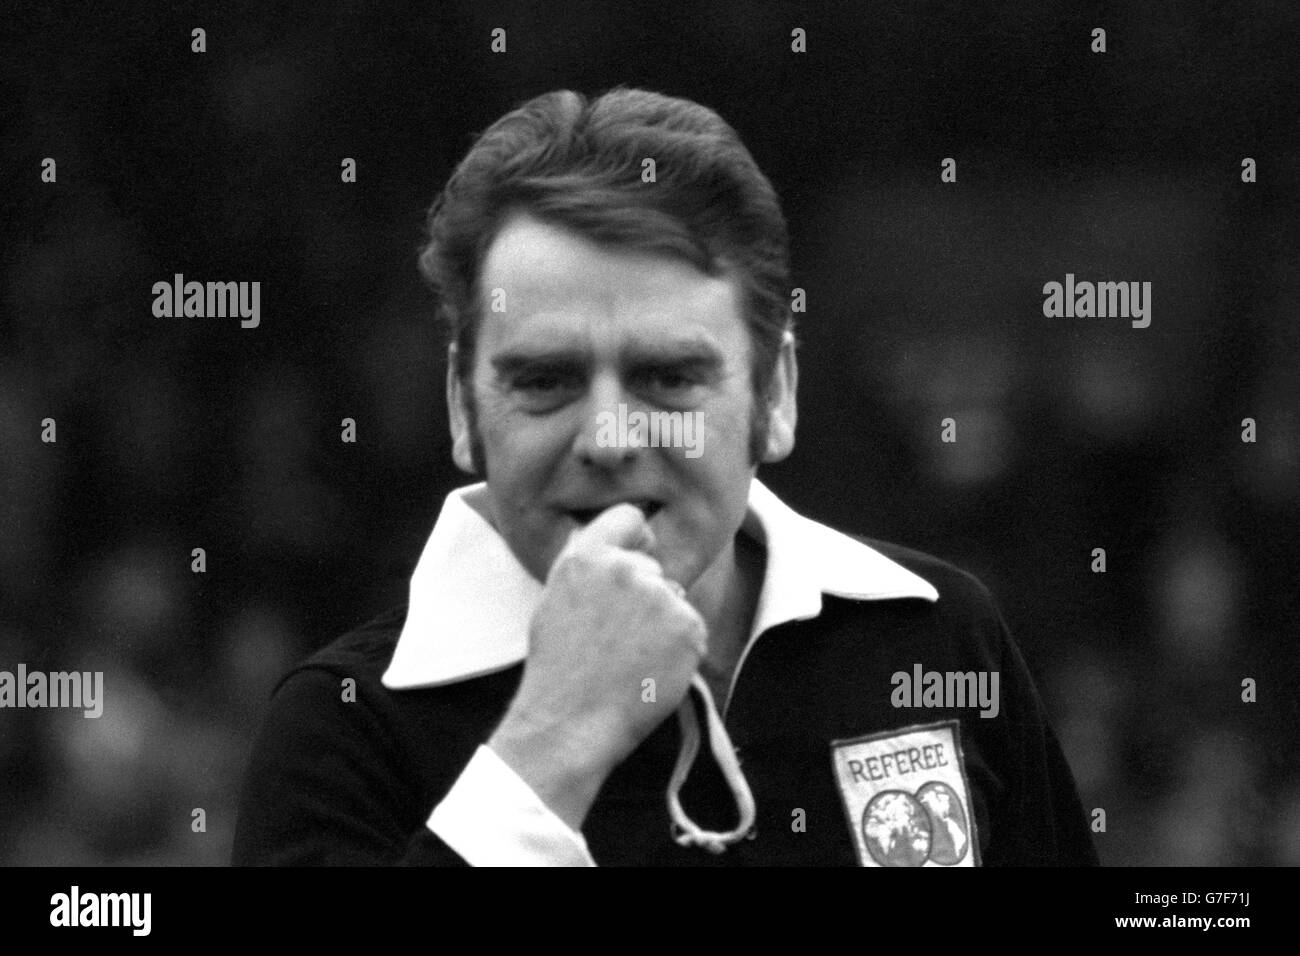 Soccer - Referee Pat Partridge - London Stock Photo